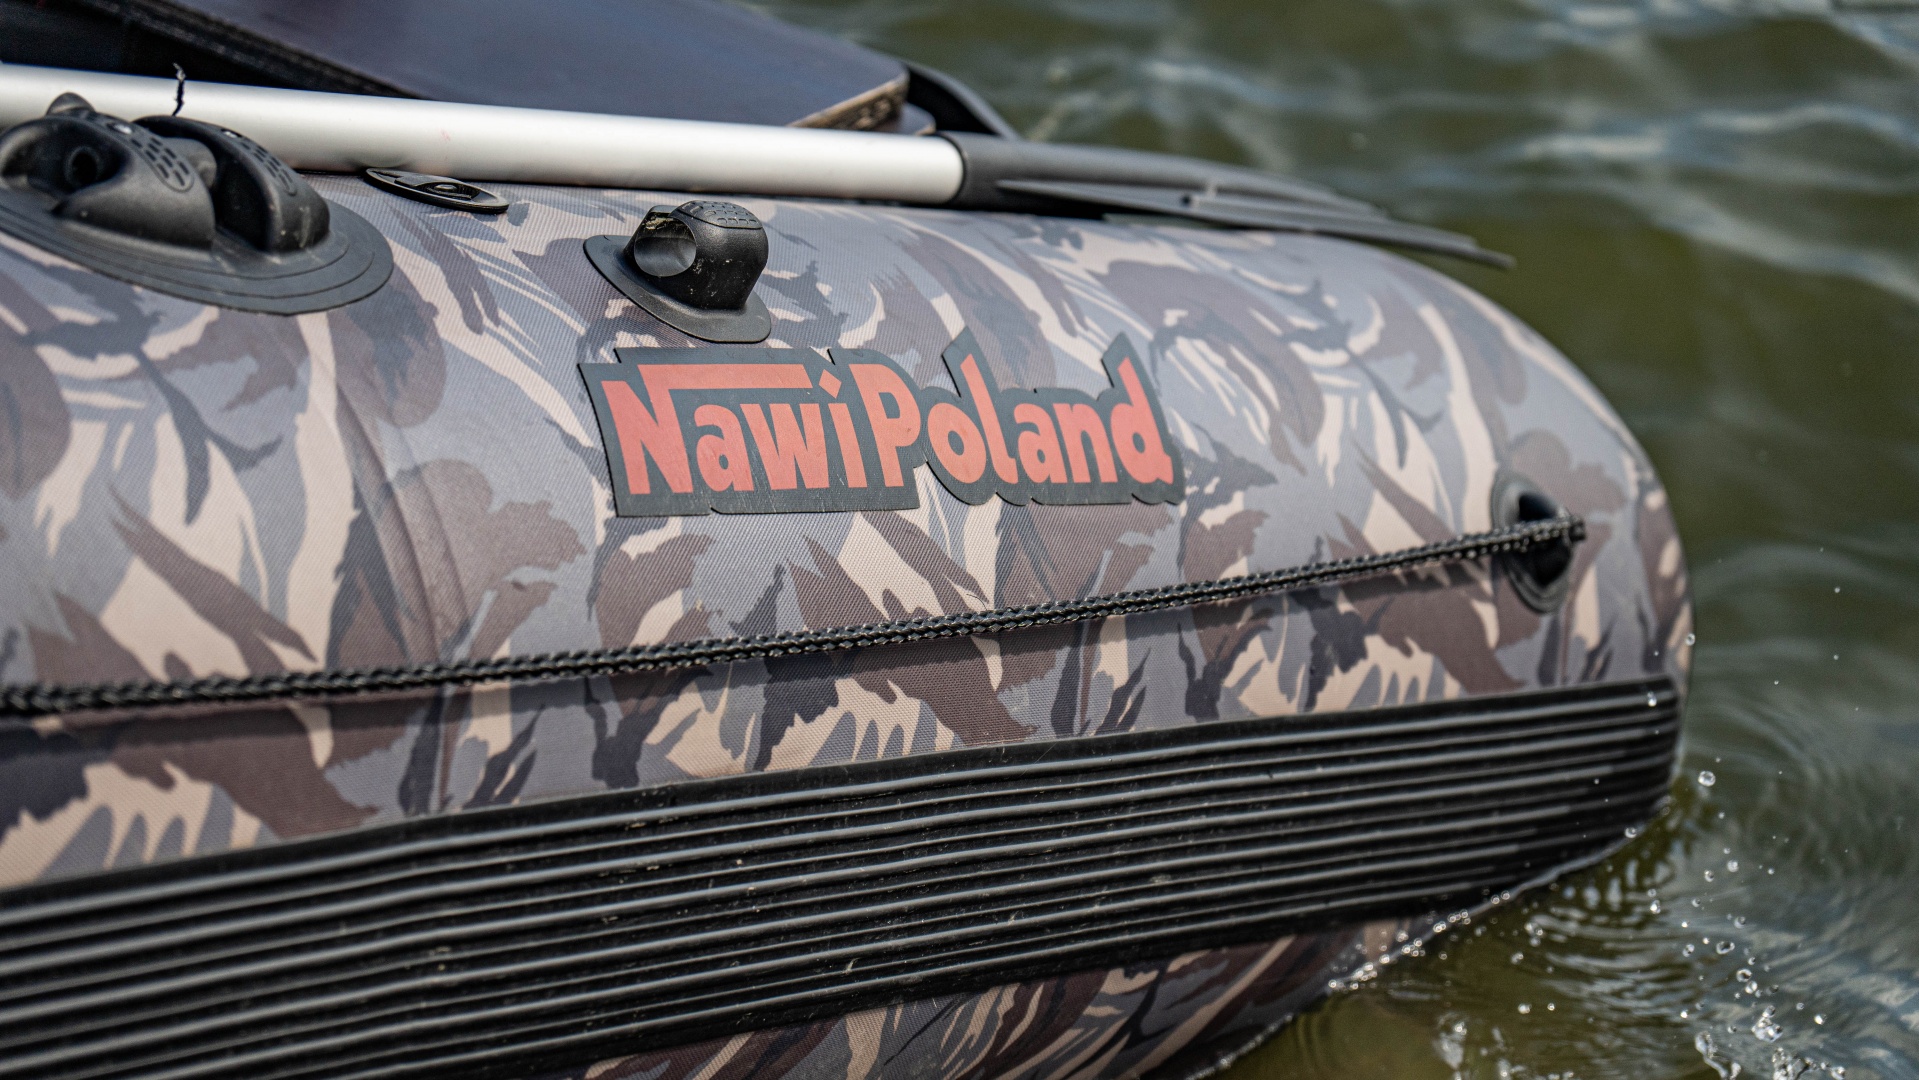 NawiPoland CAT 220 Inflatable Boat  - Catamarano